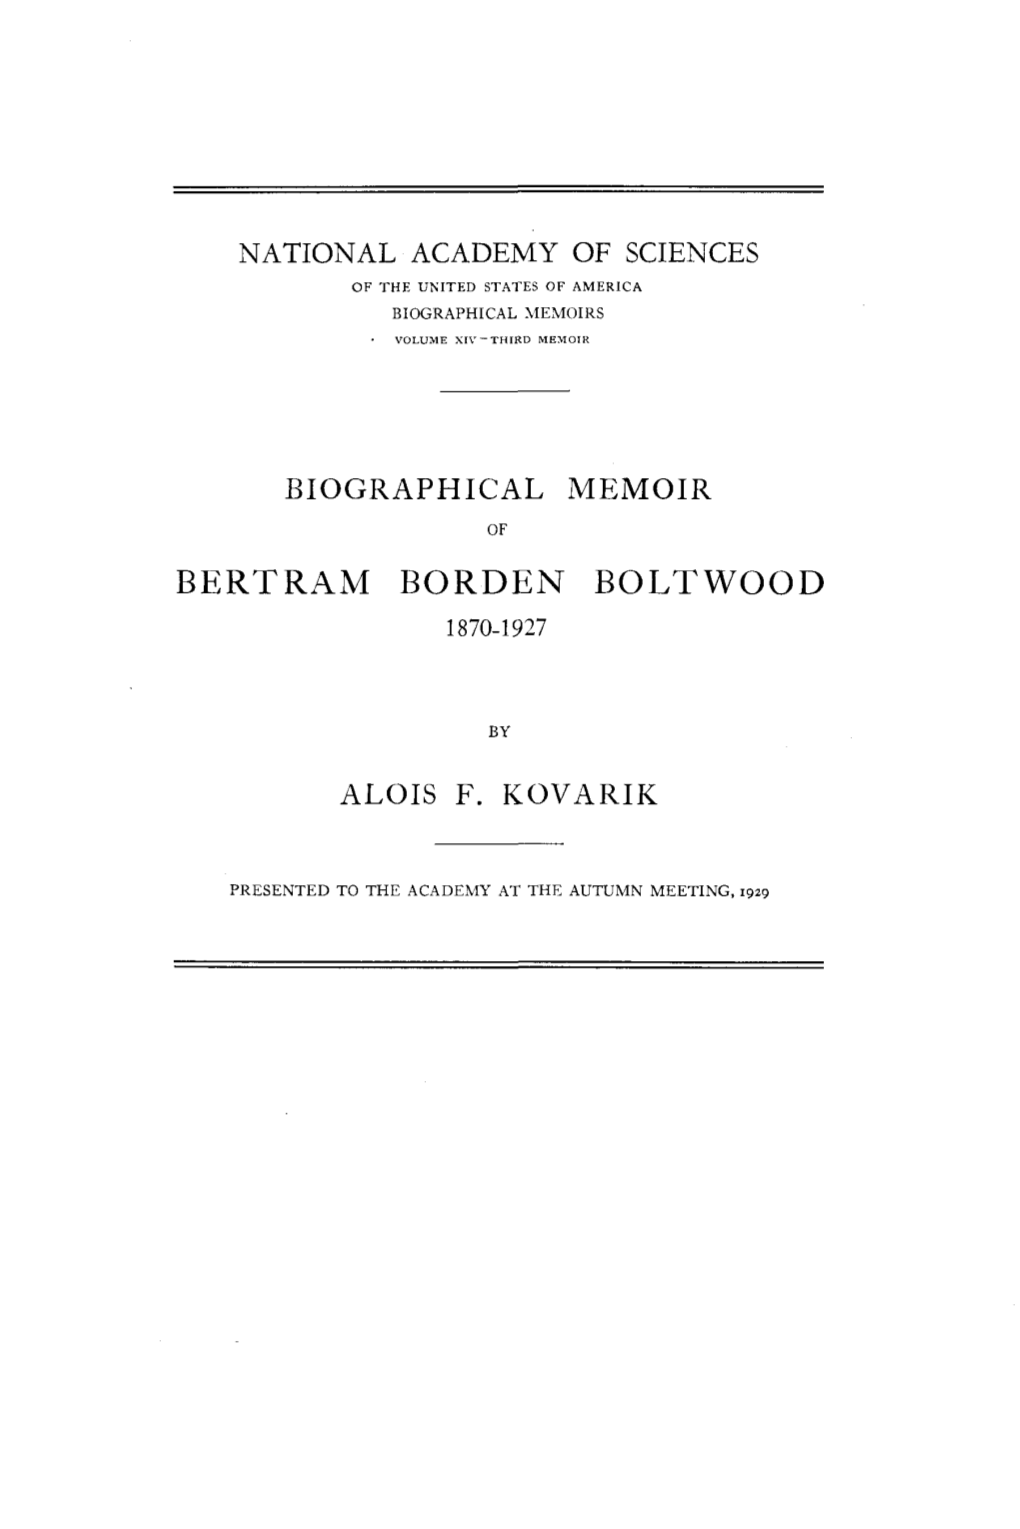 Bertram Borden Boltwood 1870-1927